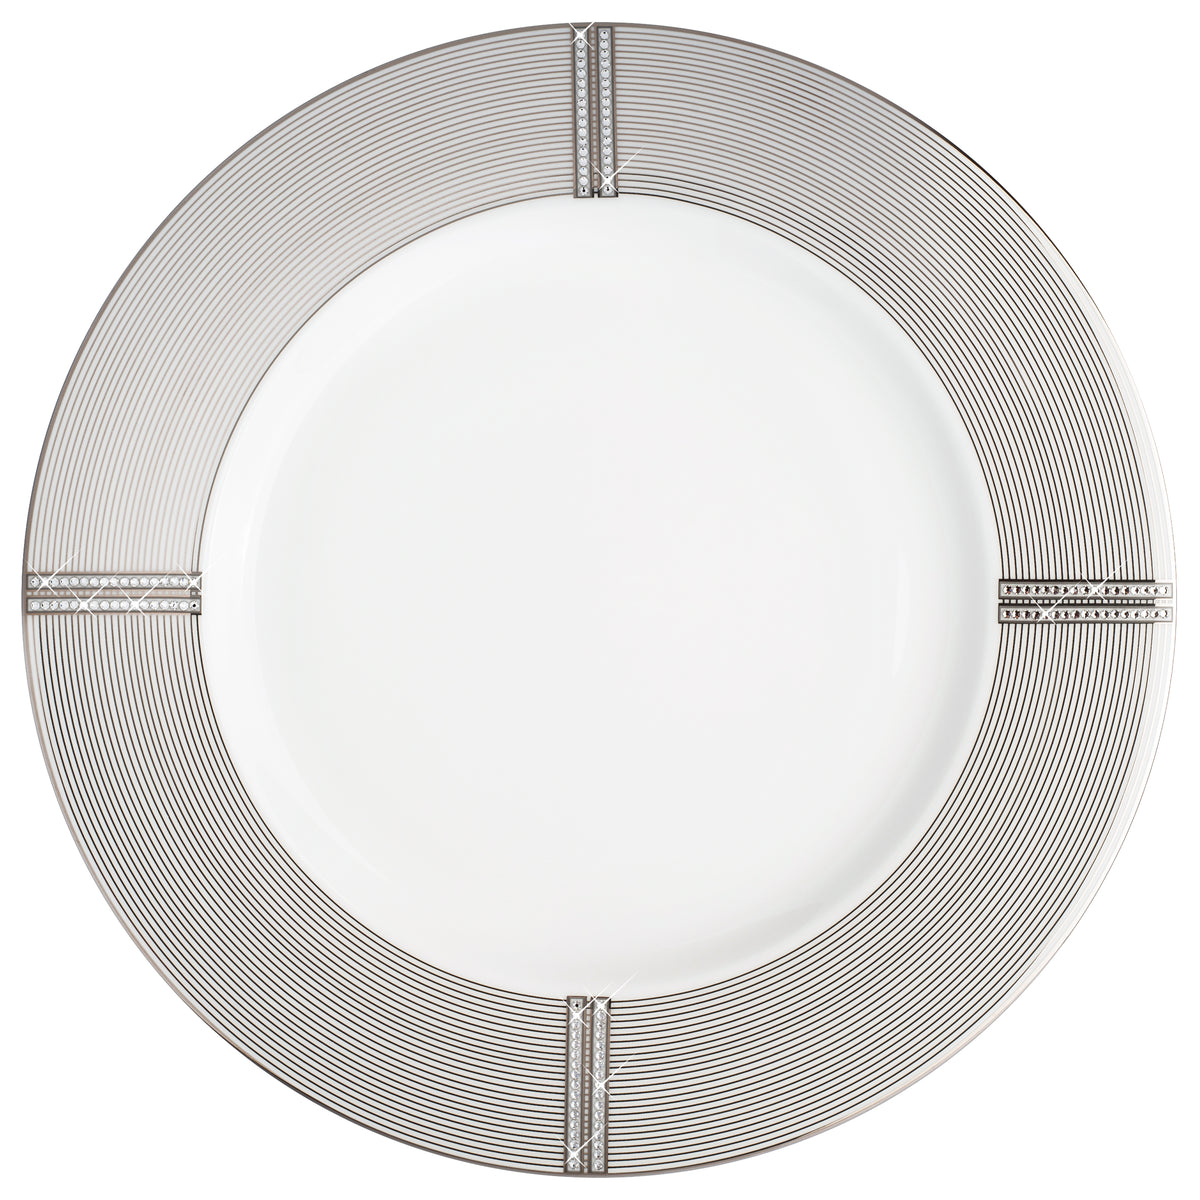 Prouna Regency Platinum Charger Plate White Background Photo